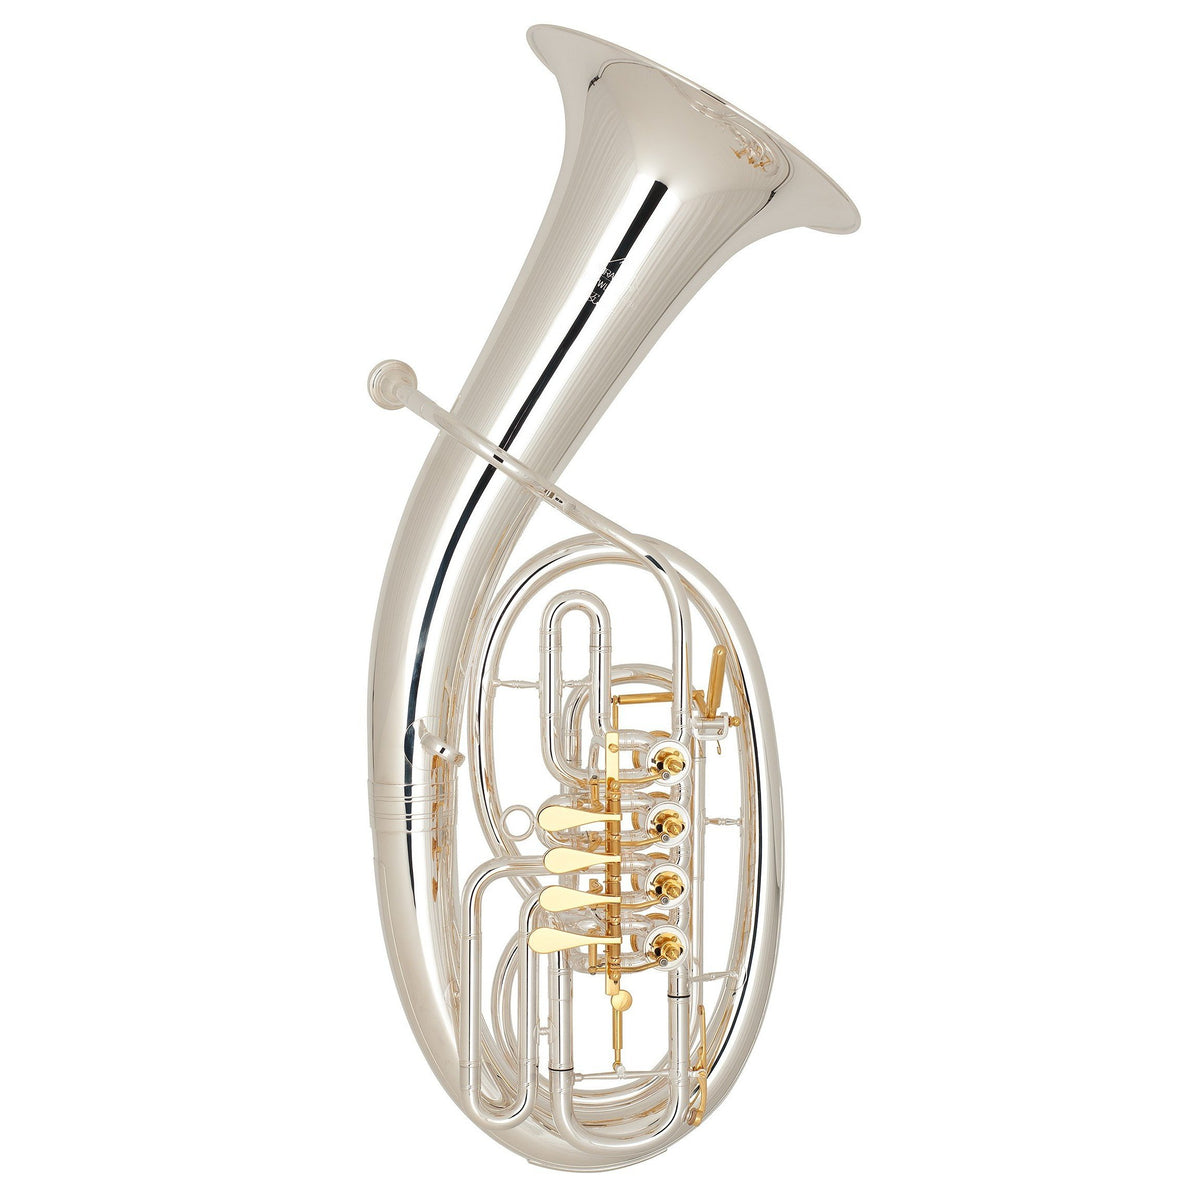 Miraphone - Model 47WL Loimayr Edition Tenor Horns-Tenor Horn-Miraphone-Music Elements